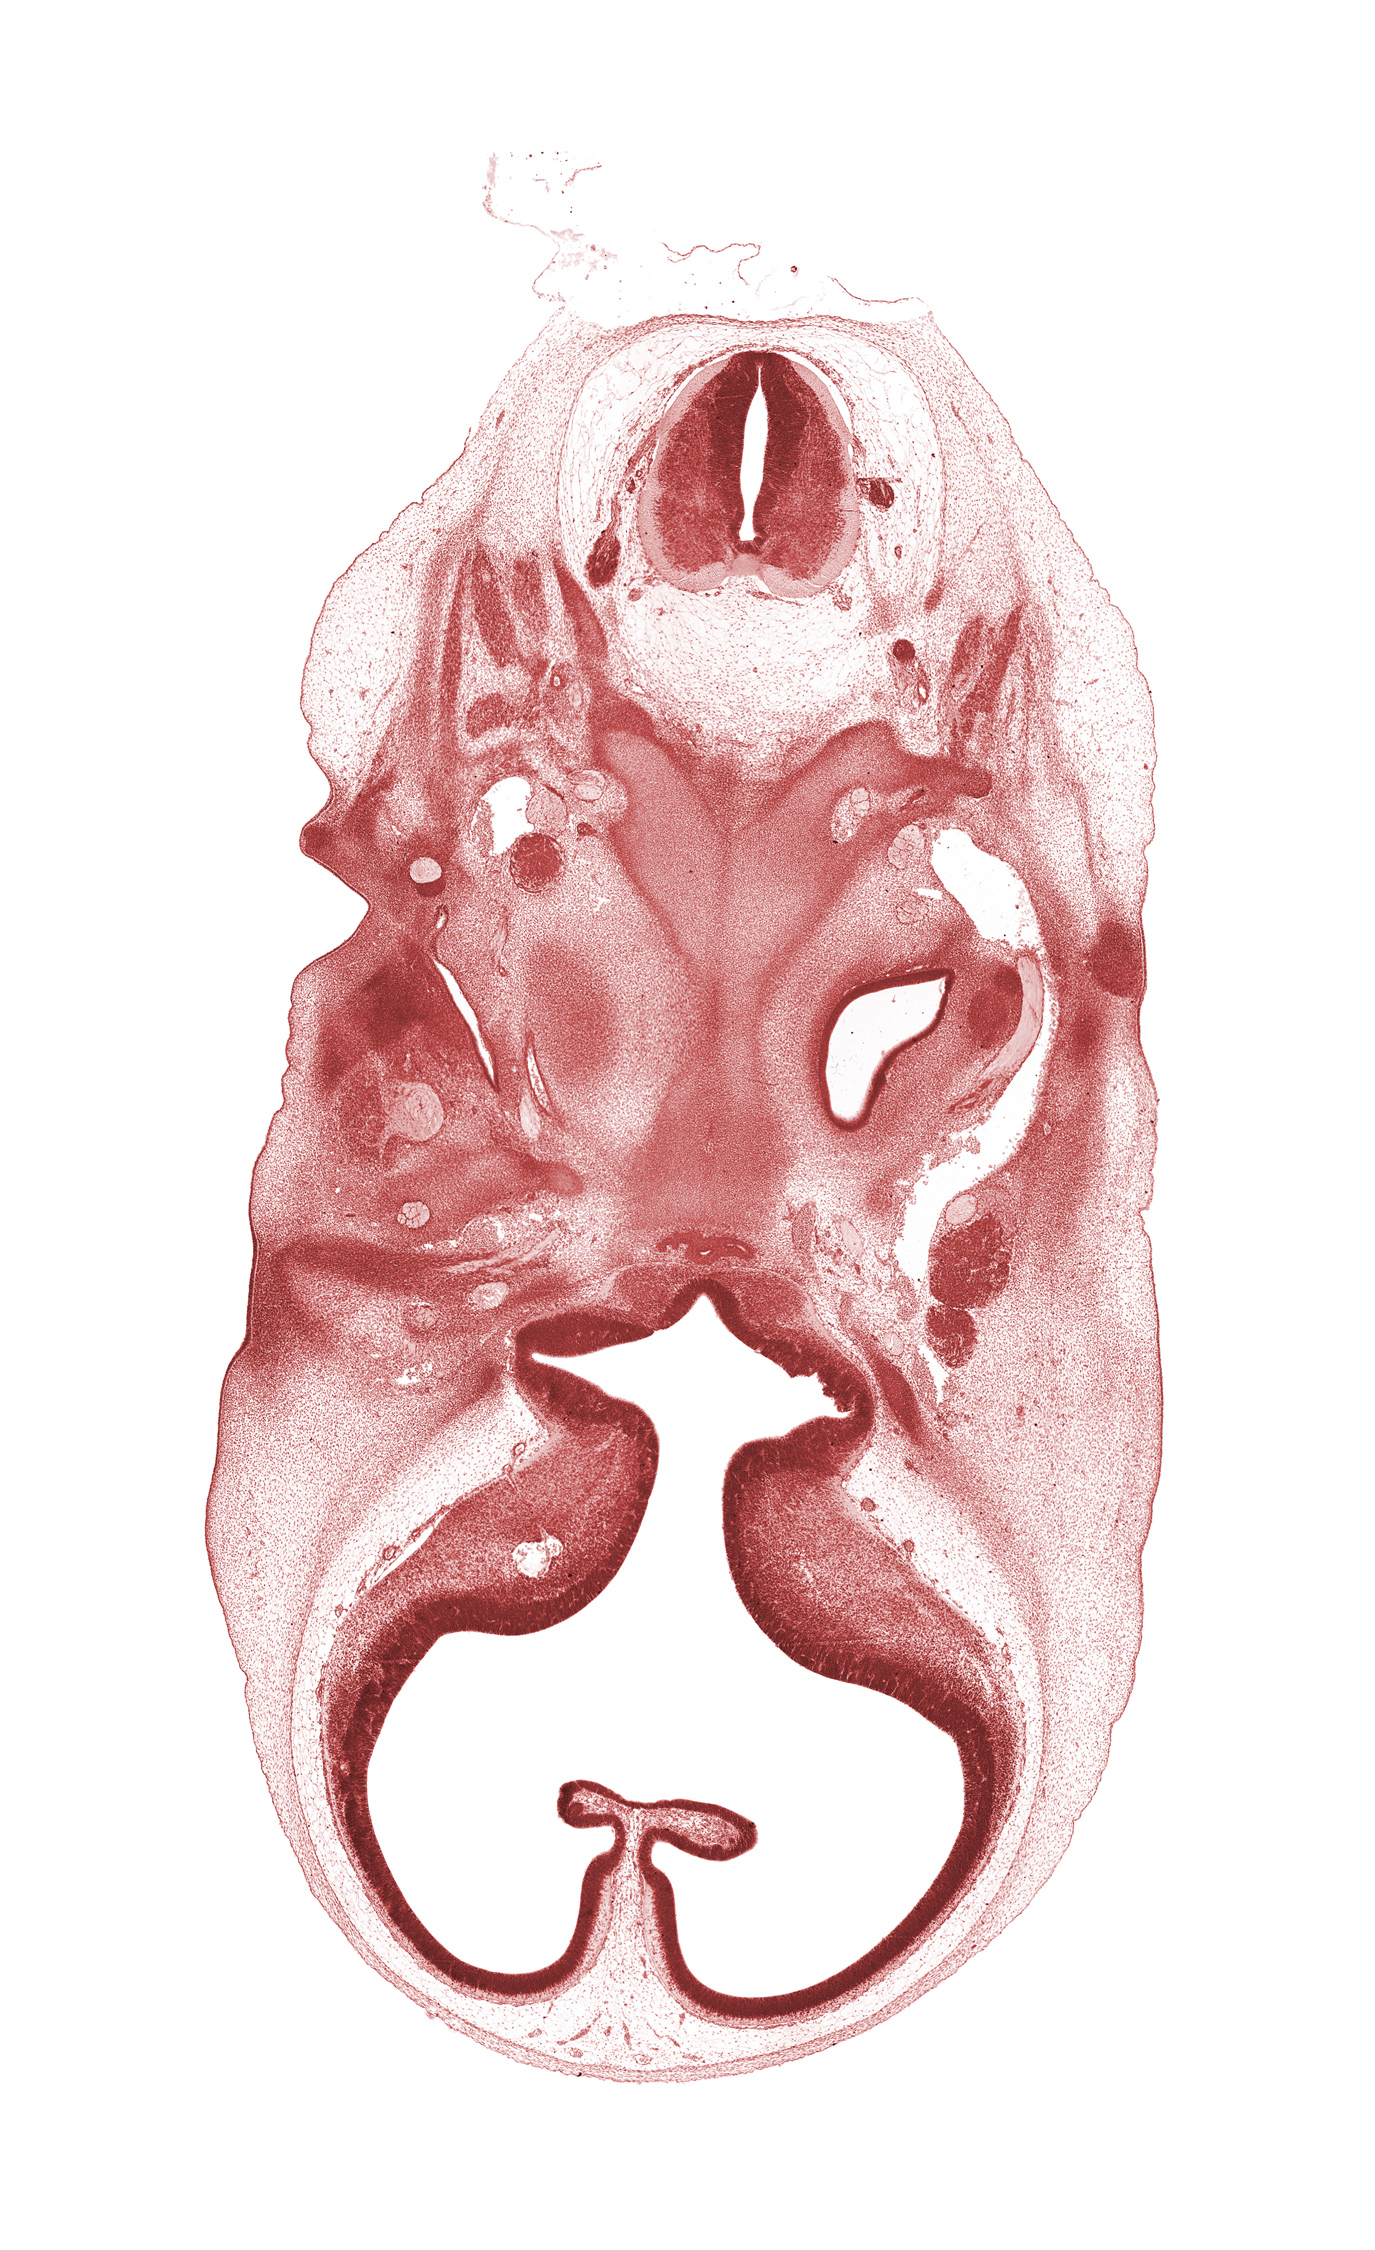 C-1 spinal ganglion, C-1 ventral root, adenohypophysis, basi-occipital (basal plate), cerebral vesicle (telencephalon), cochlear duct, corpus striatum, edge of pharyngotympanic tube, glossopharyngeal nerve (CN IX), horizontal part of facial nerve (CN VII), hypoglossal nerve (CN XII), internal carotid artery, neural arch of C-1 vertebra (atlas), orbitosphenoid, semispinalis capitis muscle, spinal accessory nerve (CN XI), splenius muscle, suboccipital muscle, third ventricle, trapezius muscle, vertebral artery